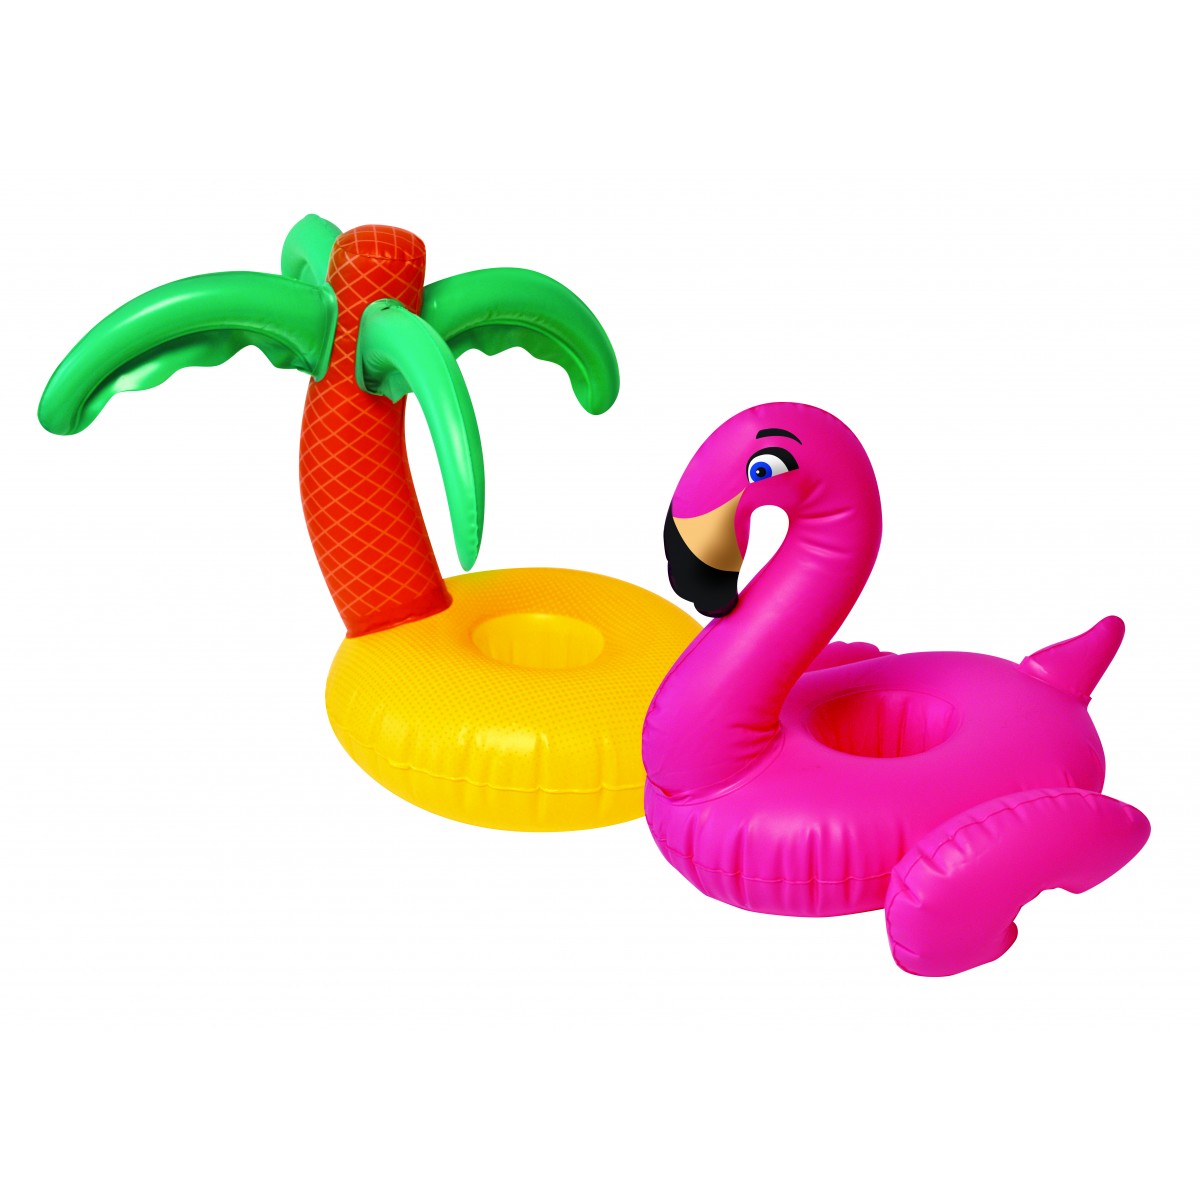 Flamingo and Palm Tree Drink Holder Set